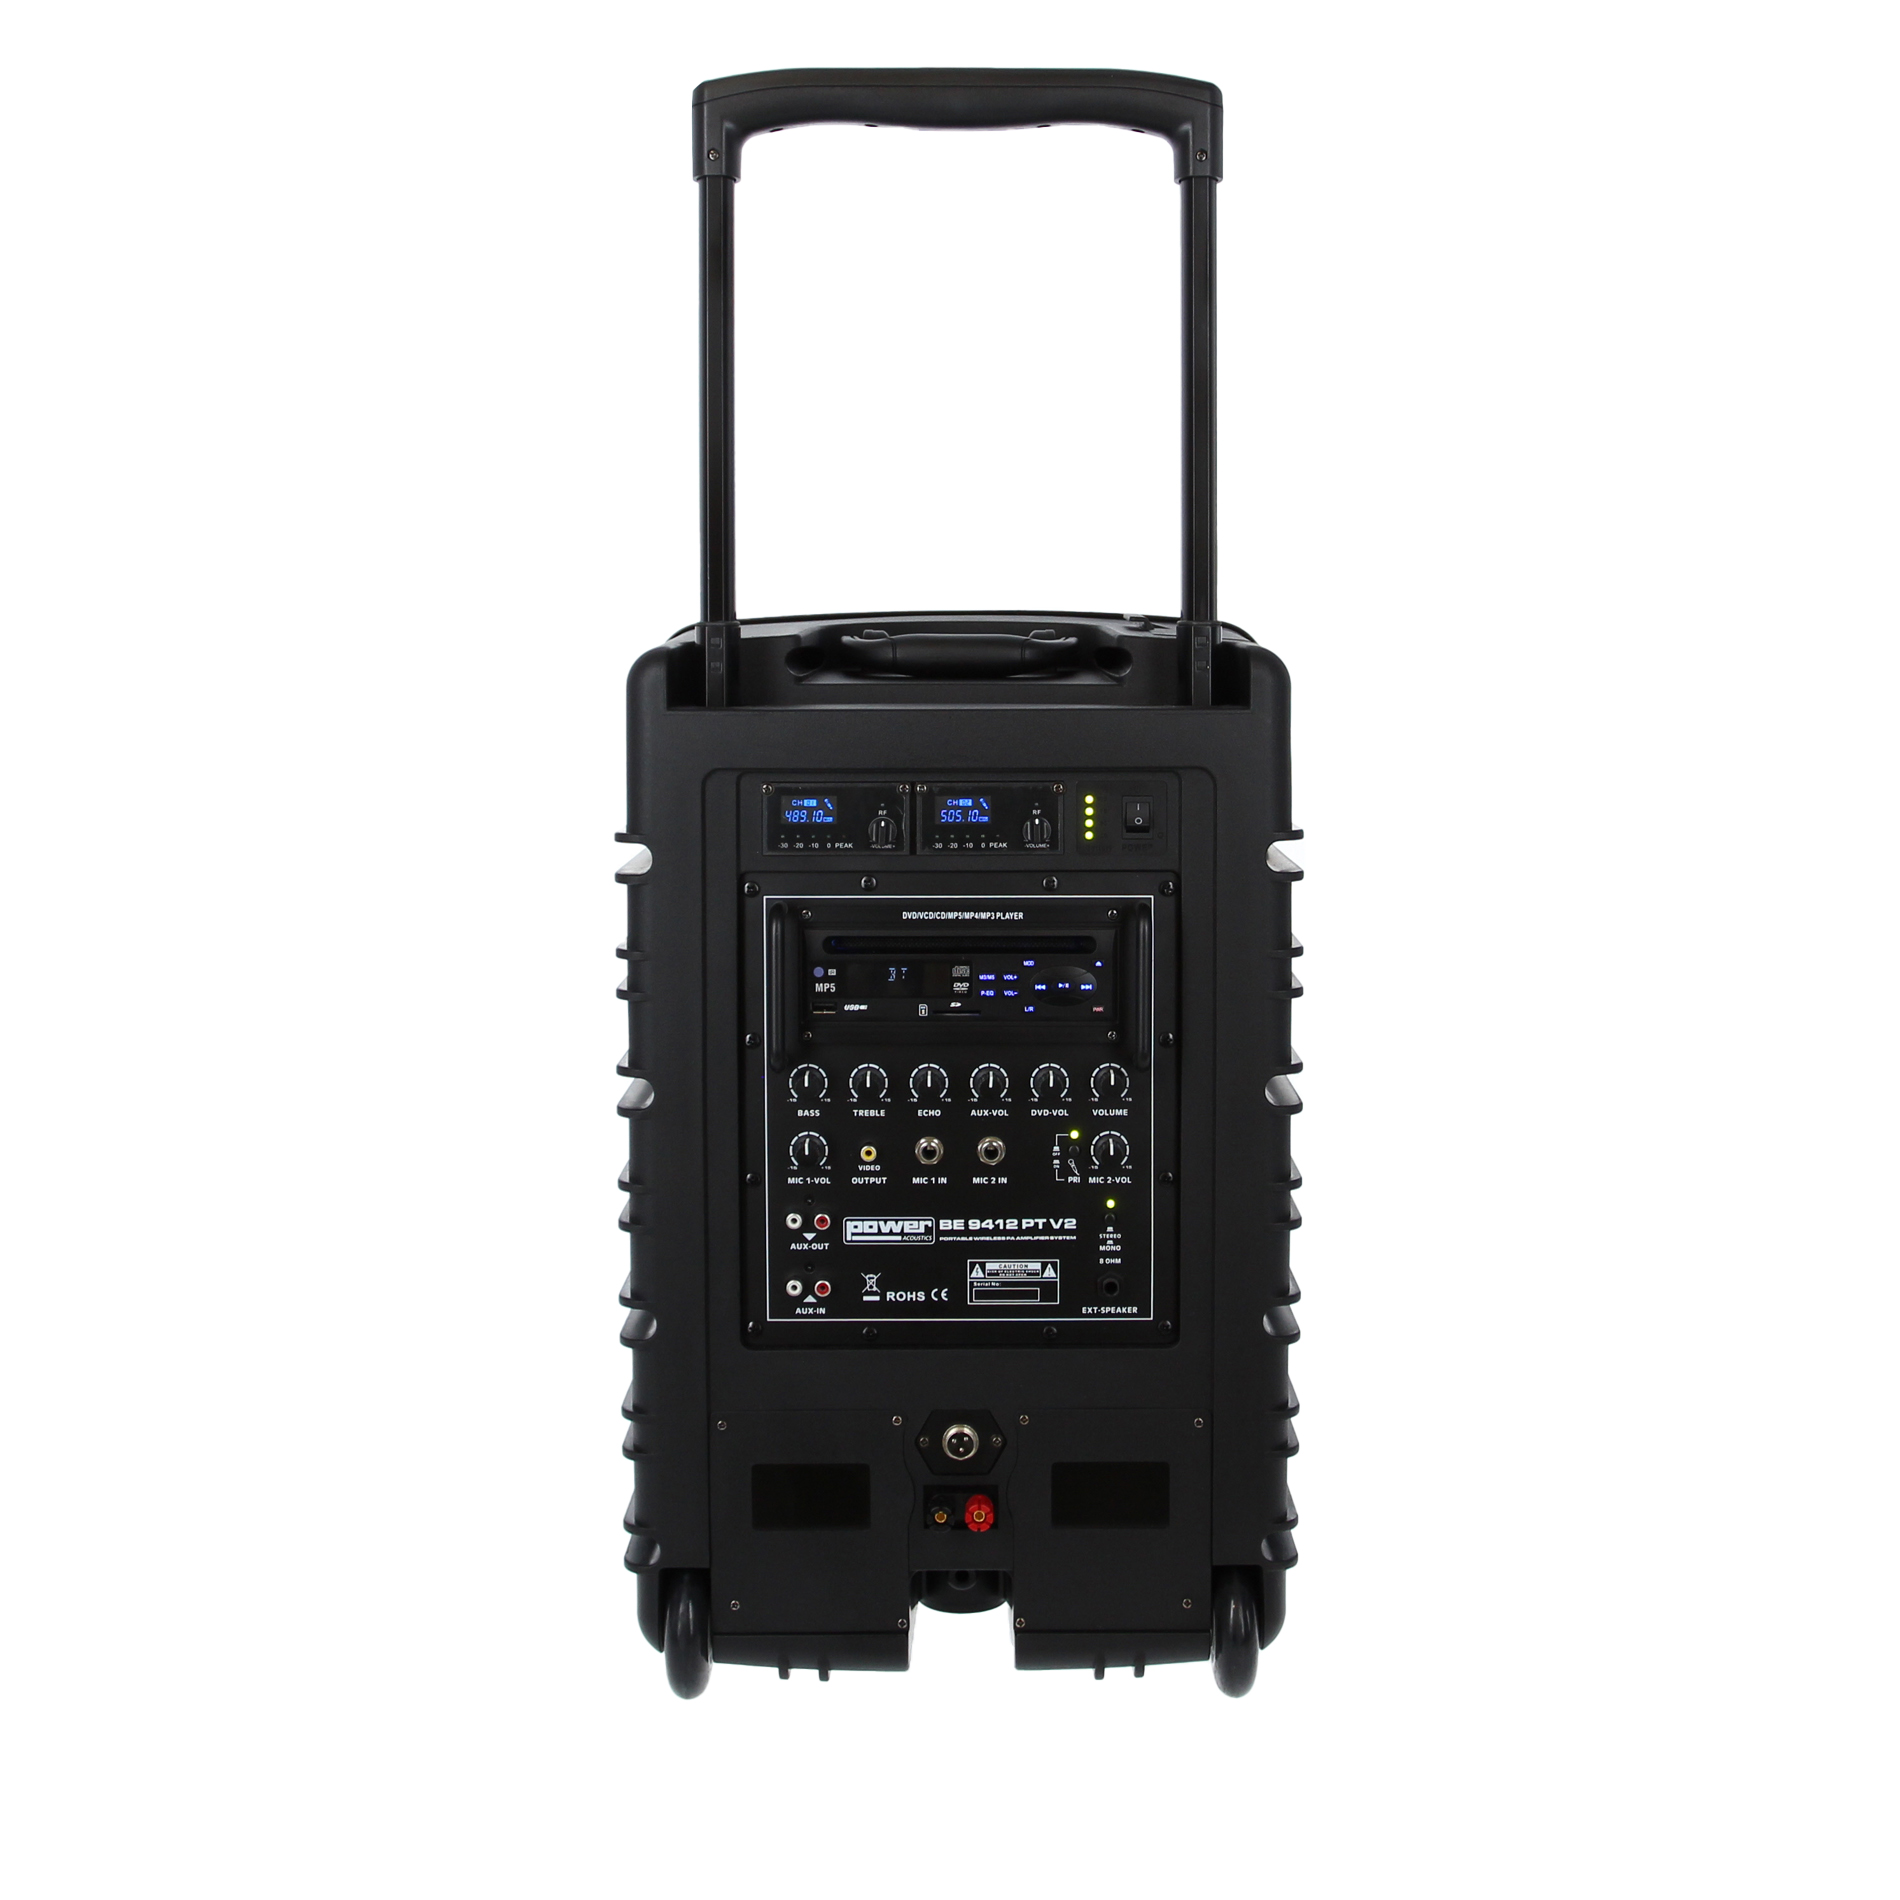 Power Acoustics Be 9412 Pt V2 - Portable PA system - Variation 3